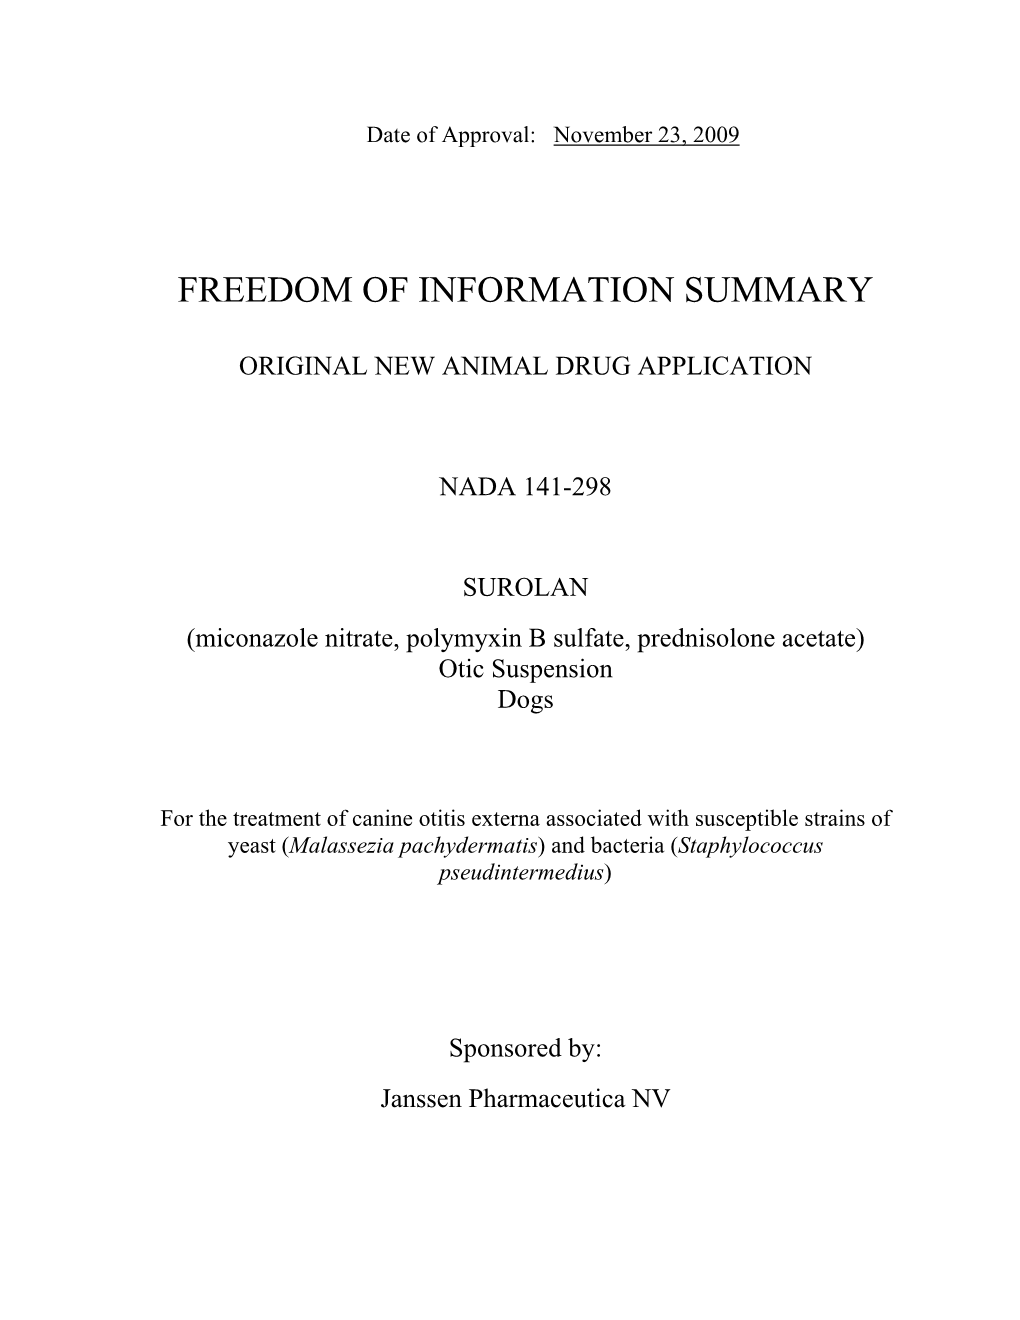 Freedom of Information Summary